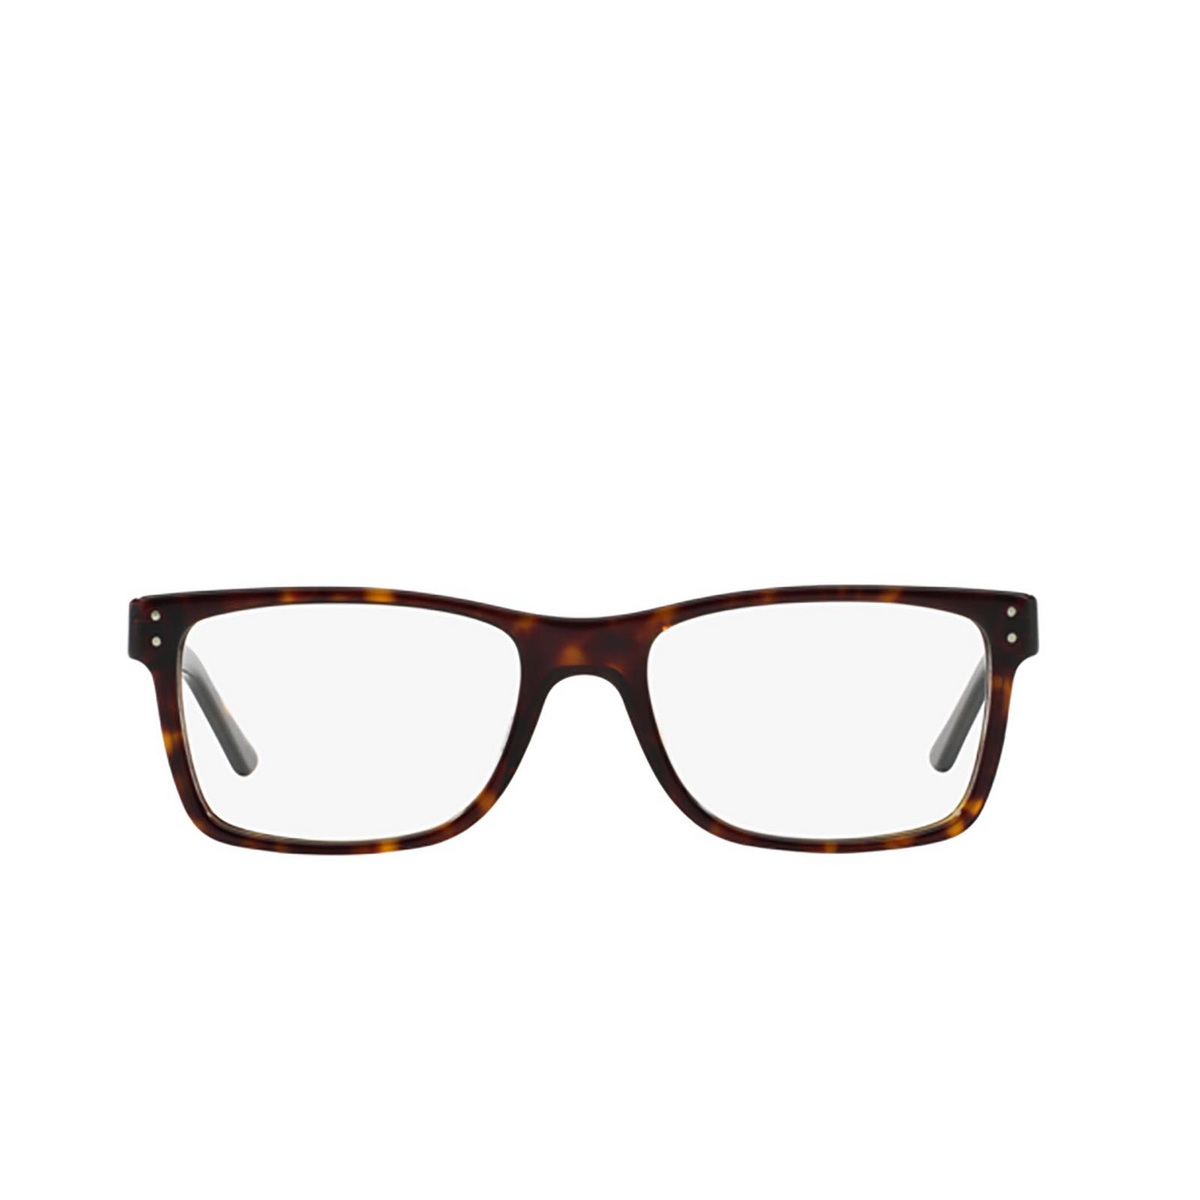 Polo Ralph Lauren® Square Eyeglasses: PH2057 color 5003 - front view.